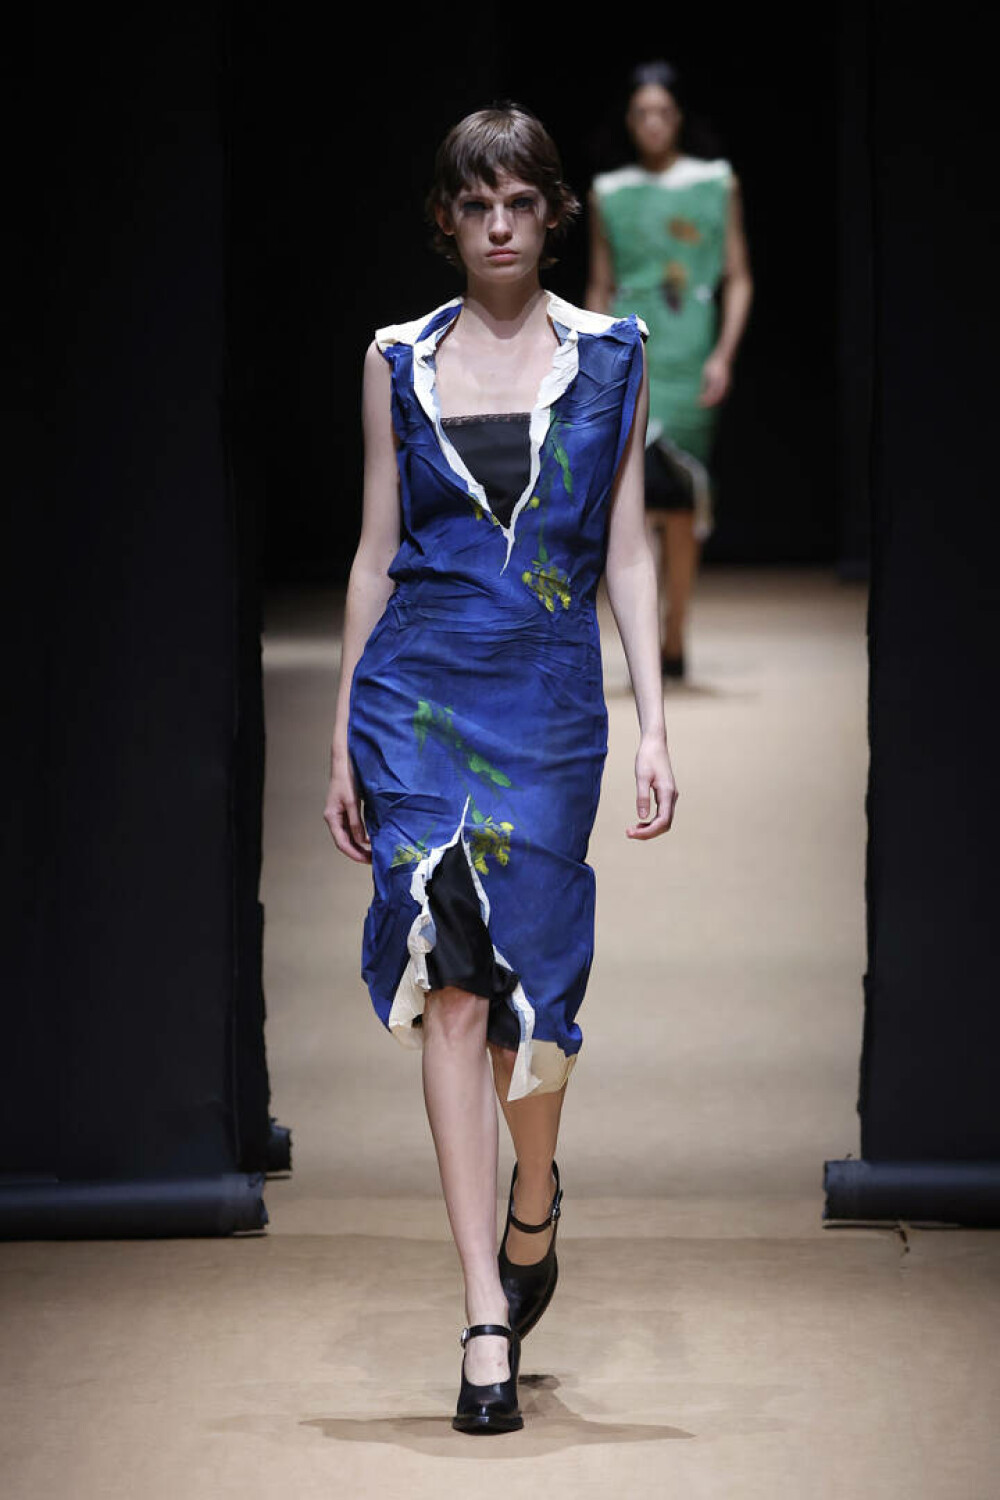 Ținute spectaculoase la Milano Fashion Week. Armani, Prada și Maison Margiela, printre vedetele podiumului | GALERIE FOTO - Imaginea 25